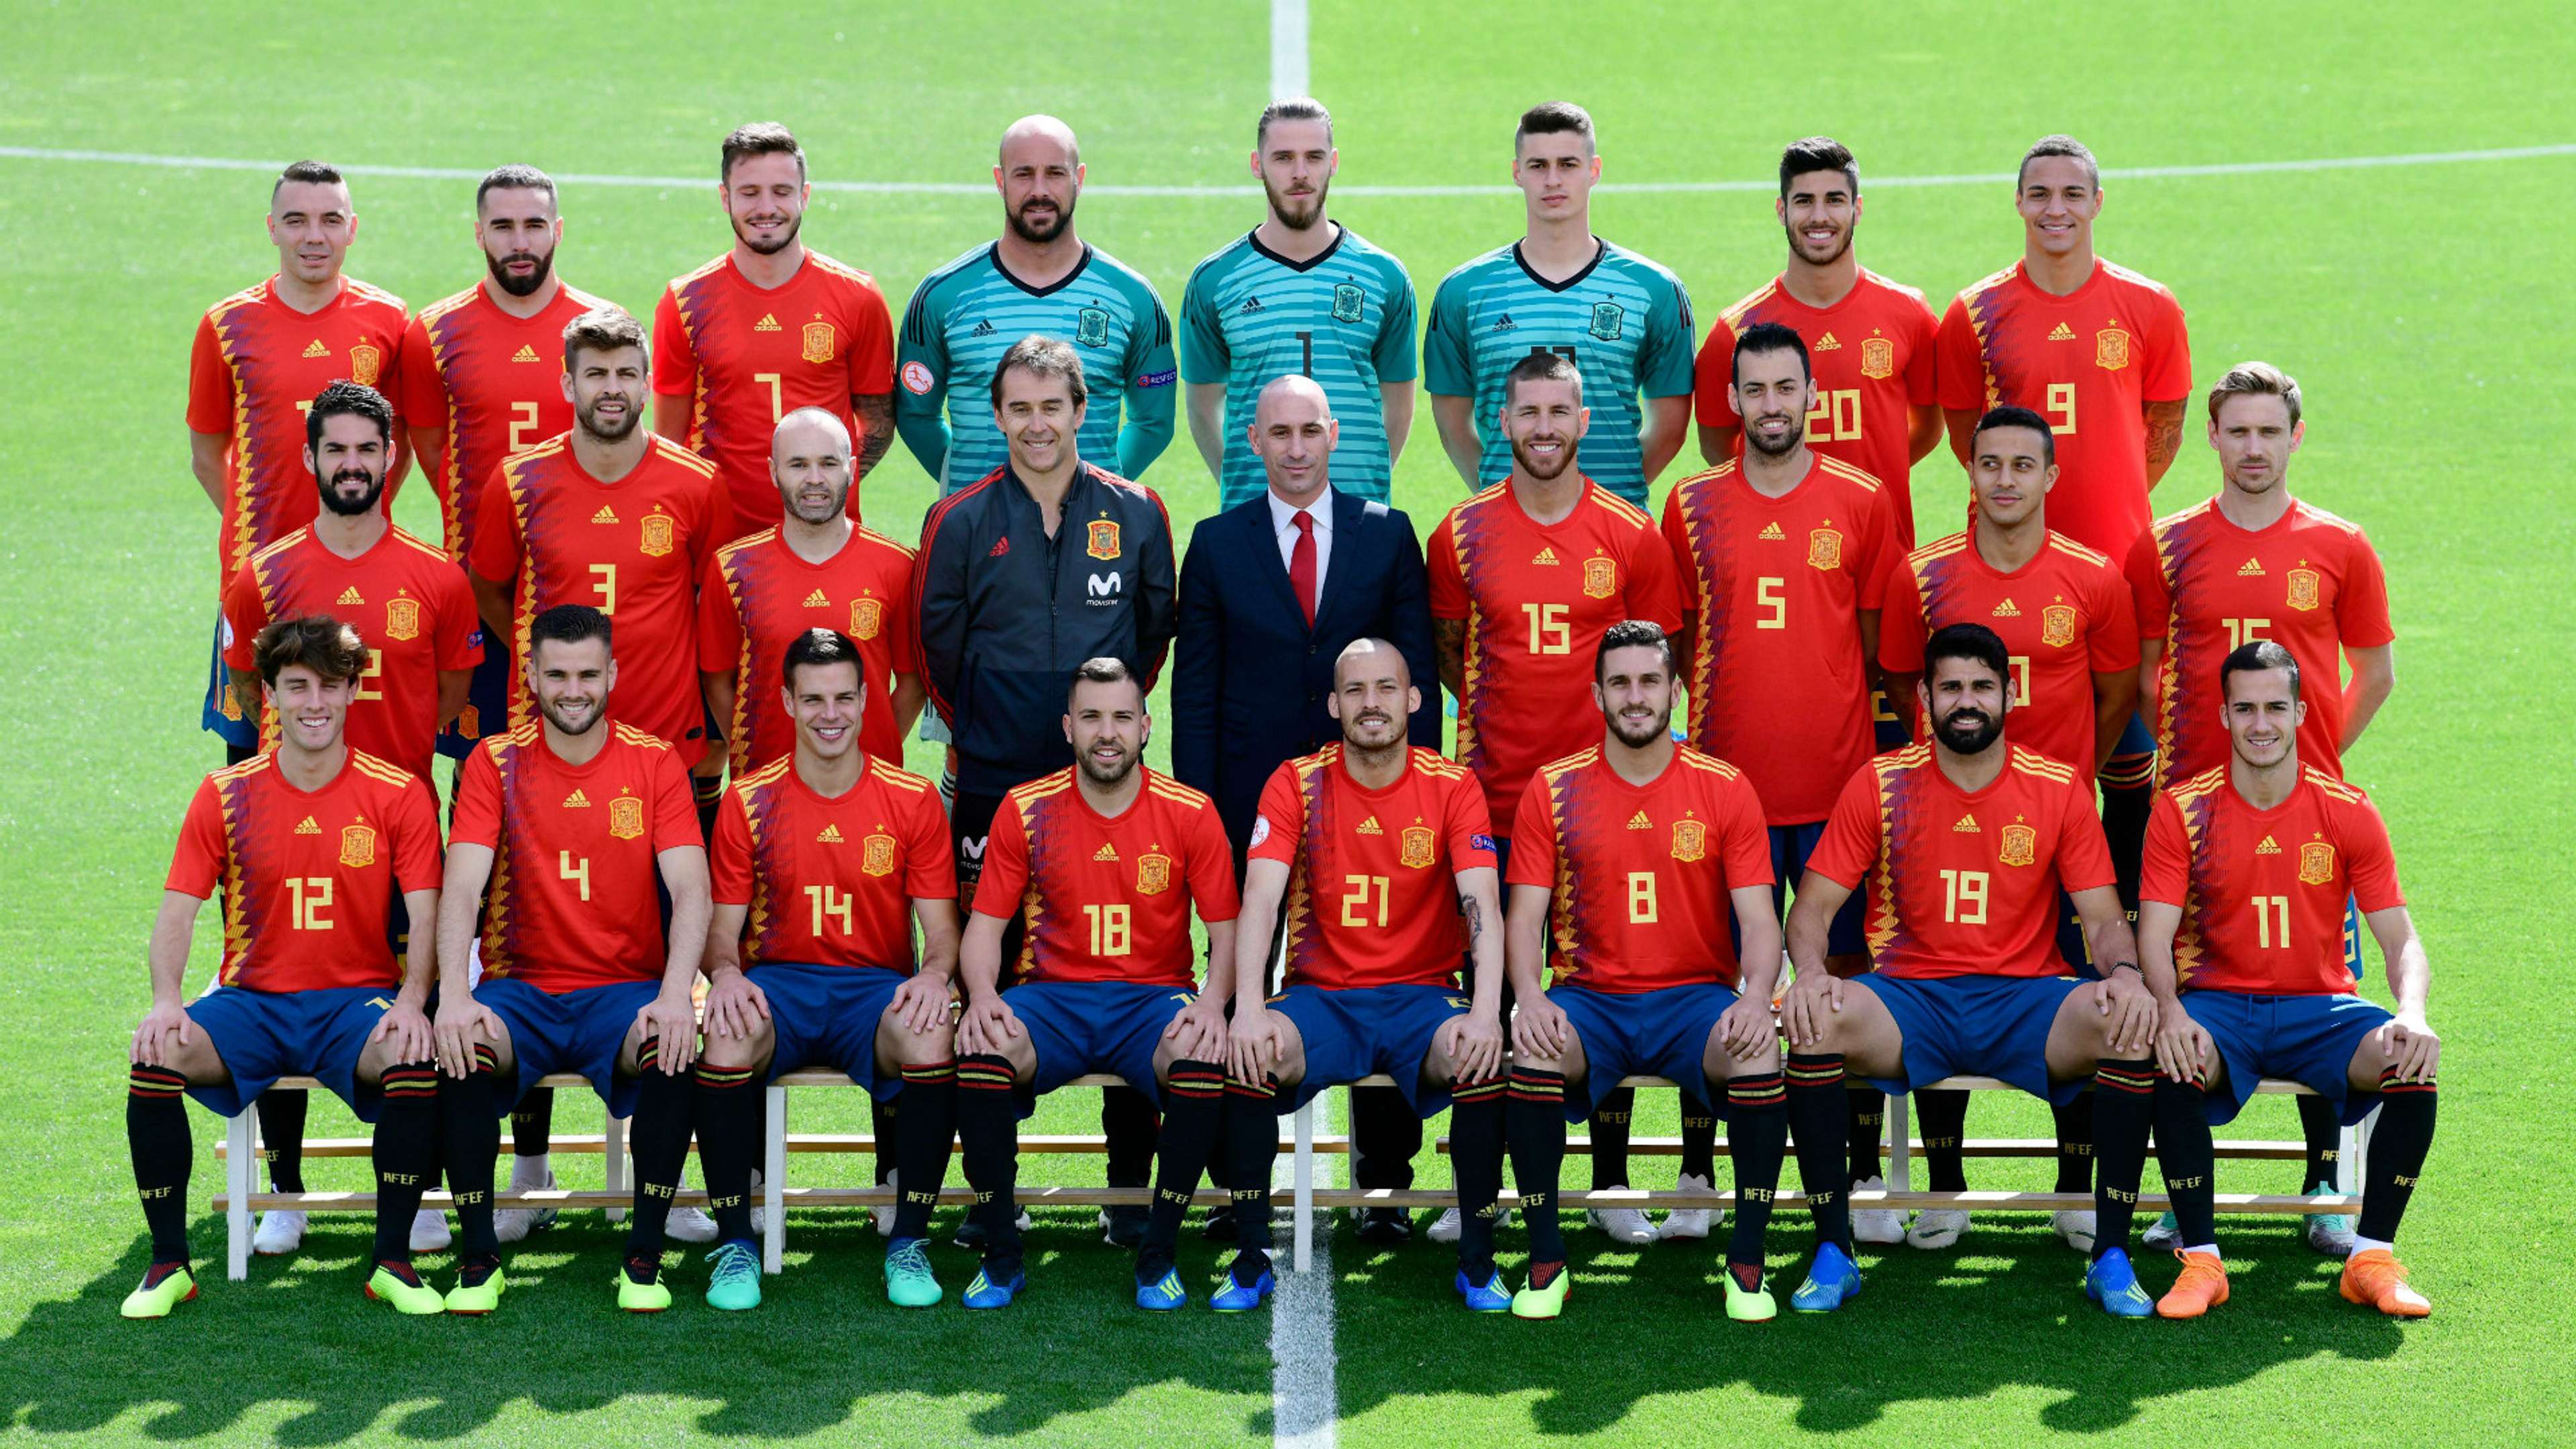 Spain national Team